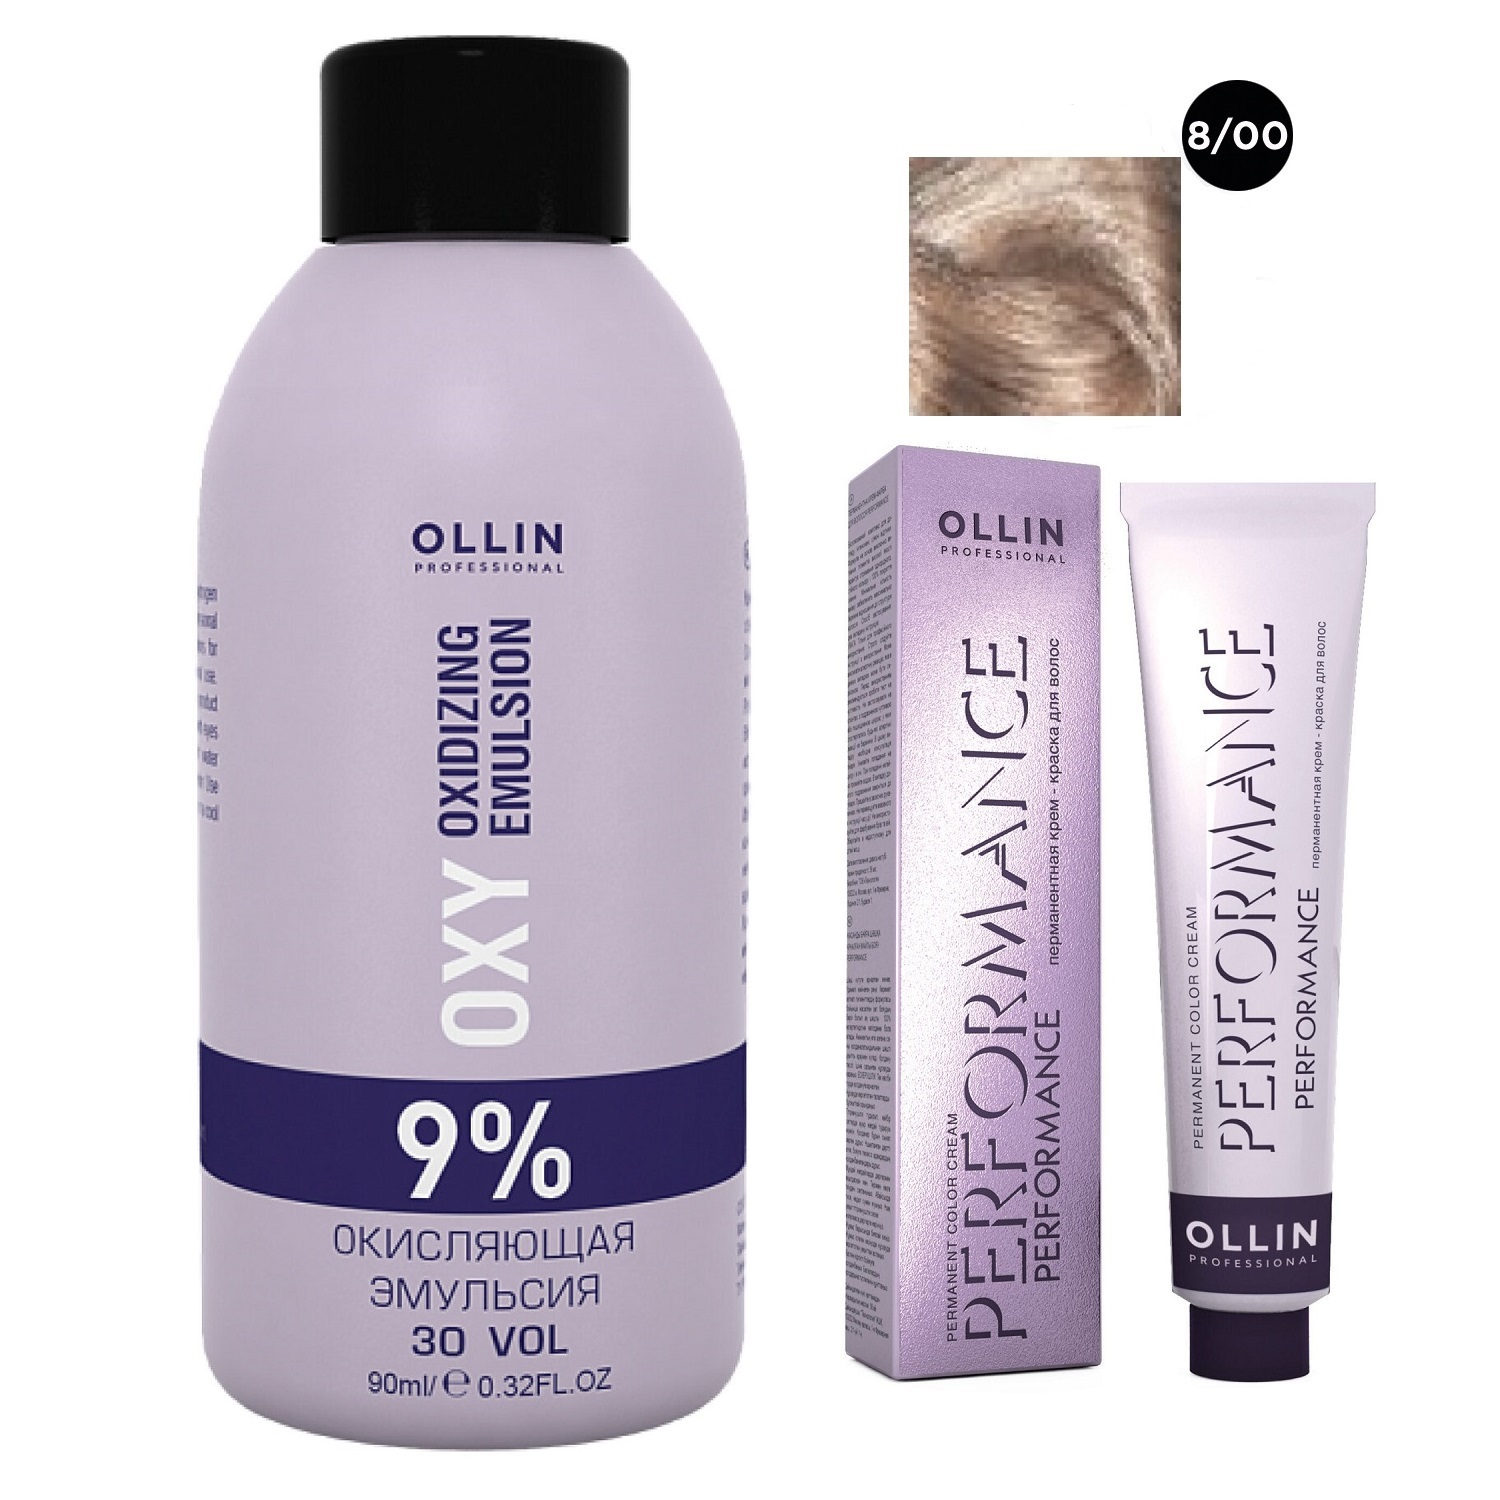 Ollin Professional Набор Перманентная крем-краска для волос Ollin Performance оттенок 8/00 светло-русый глубокий 60 мл + Окисляющая эмульсия Oxy 9% 90 мл (Ollin Professional, Performance) окисляющая эмульсия oxy 9% 1000 мл